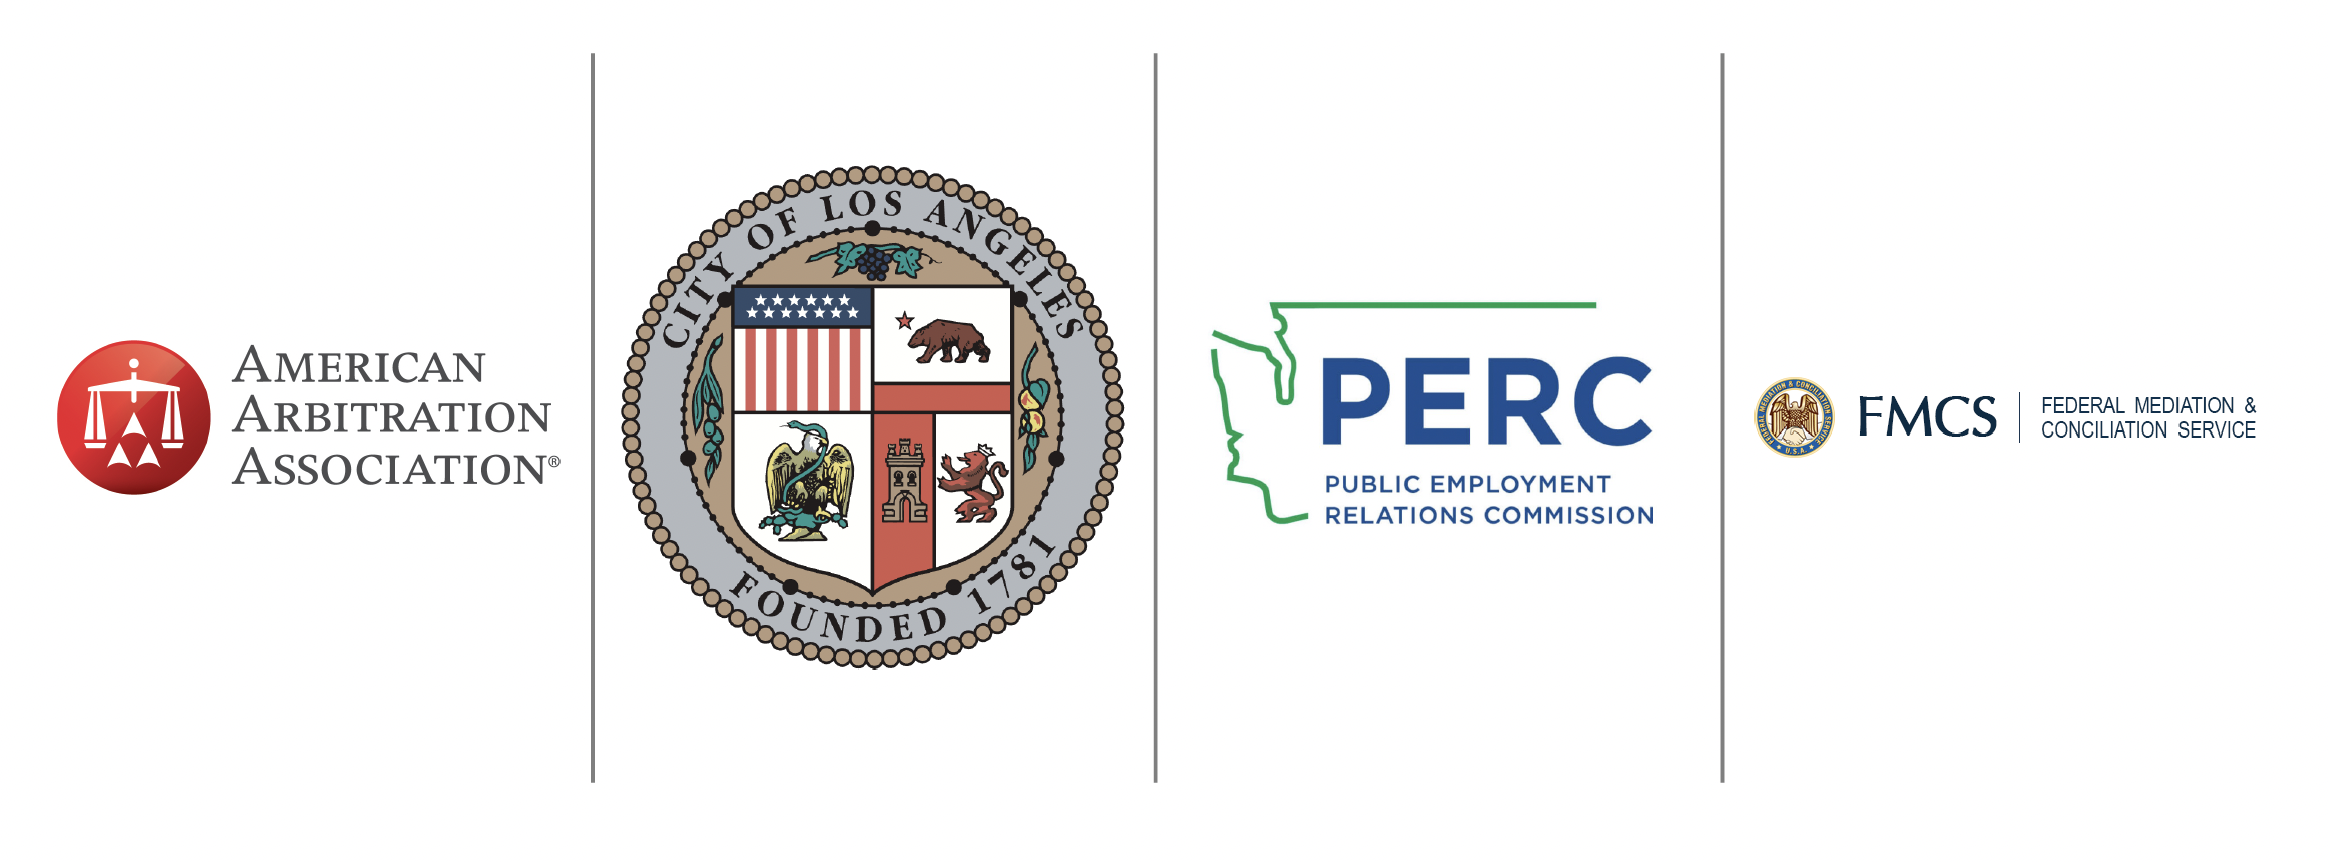 AAA, Washington PERC, FMCS and City of Los Angeles logos in a row